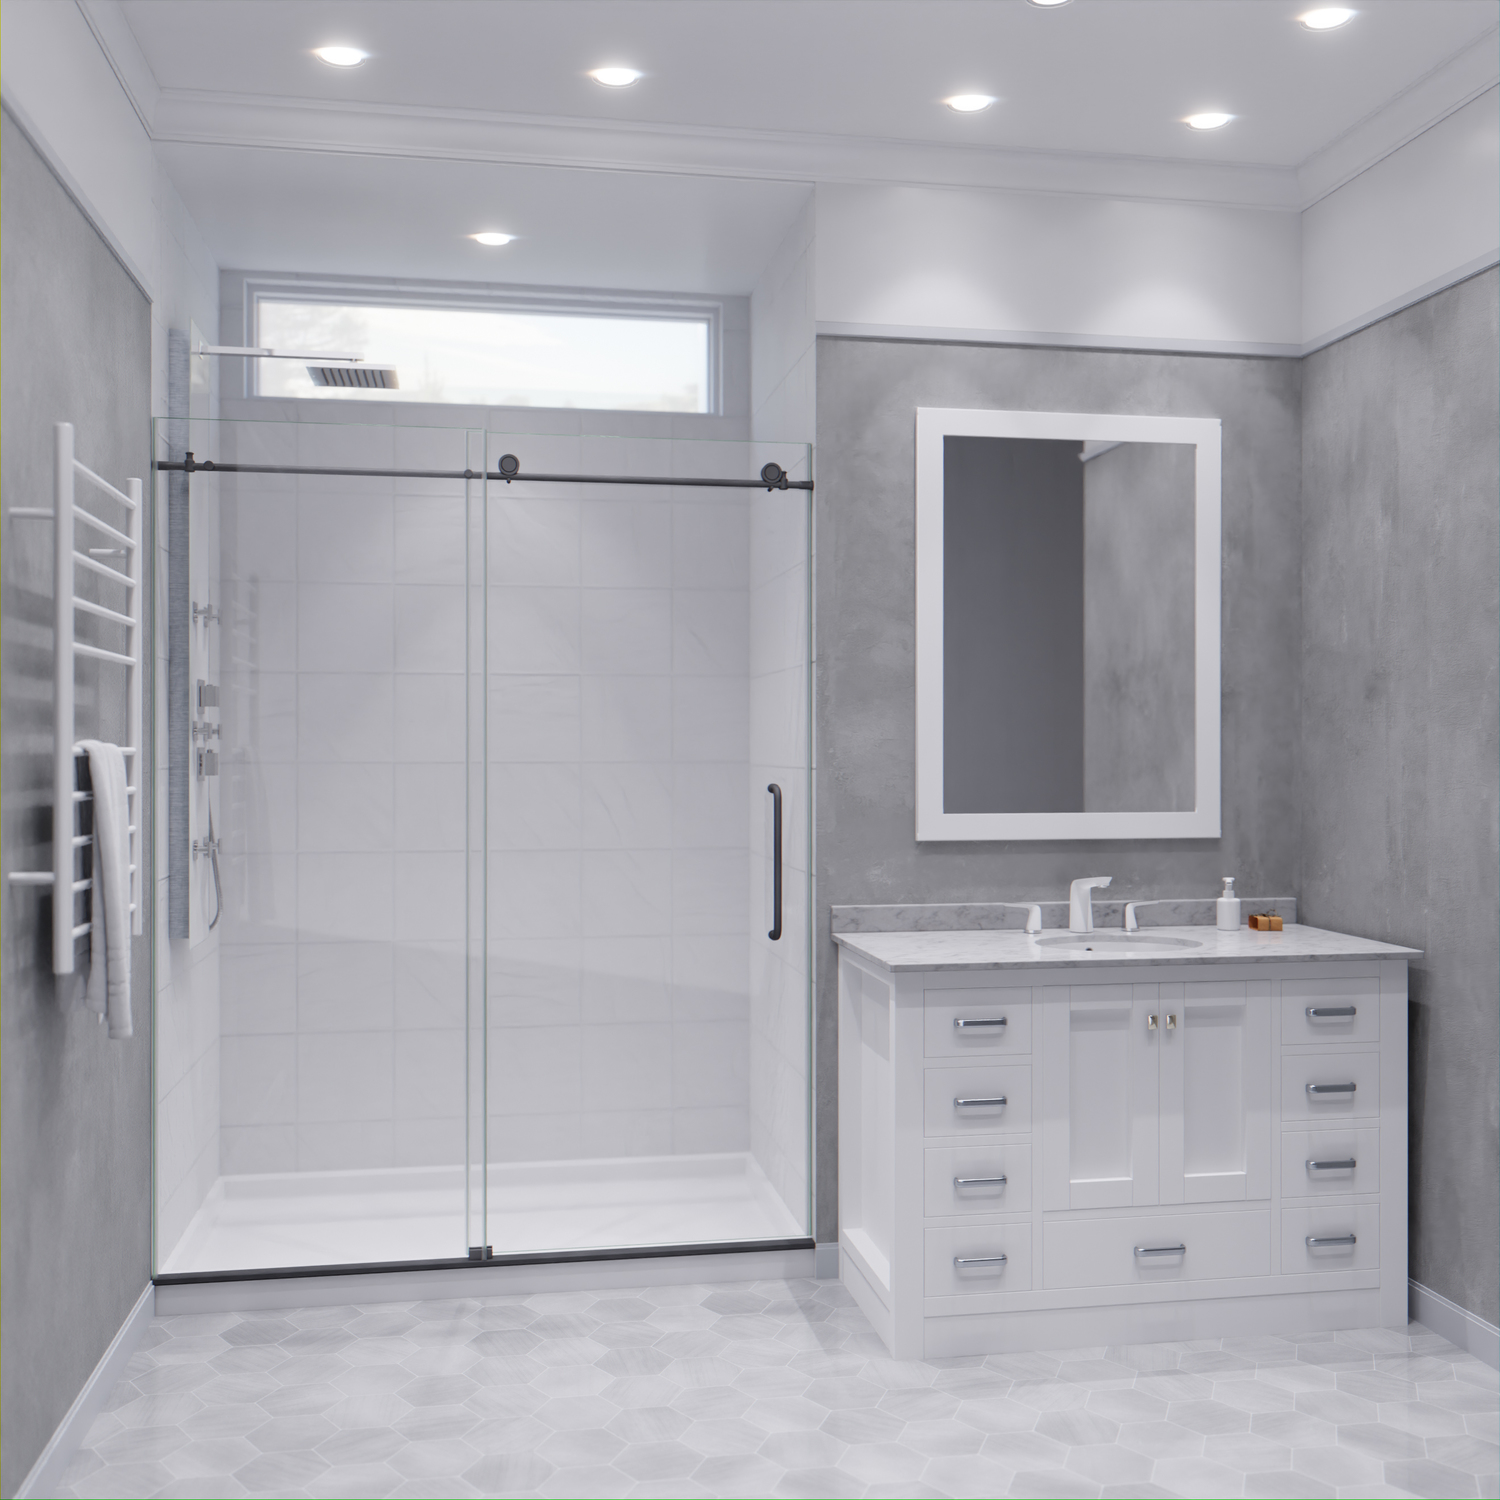 72 shower base with seat Anzzi SHOWER - Shower Doors - Sliding Black